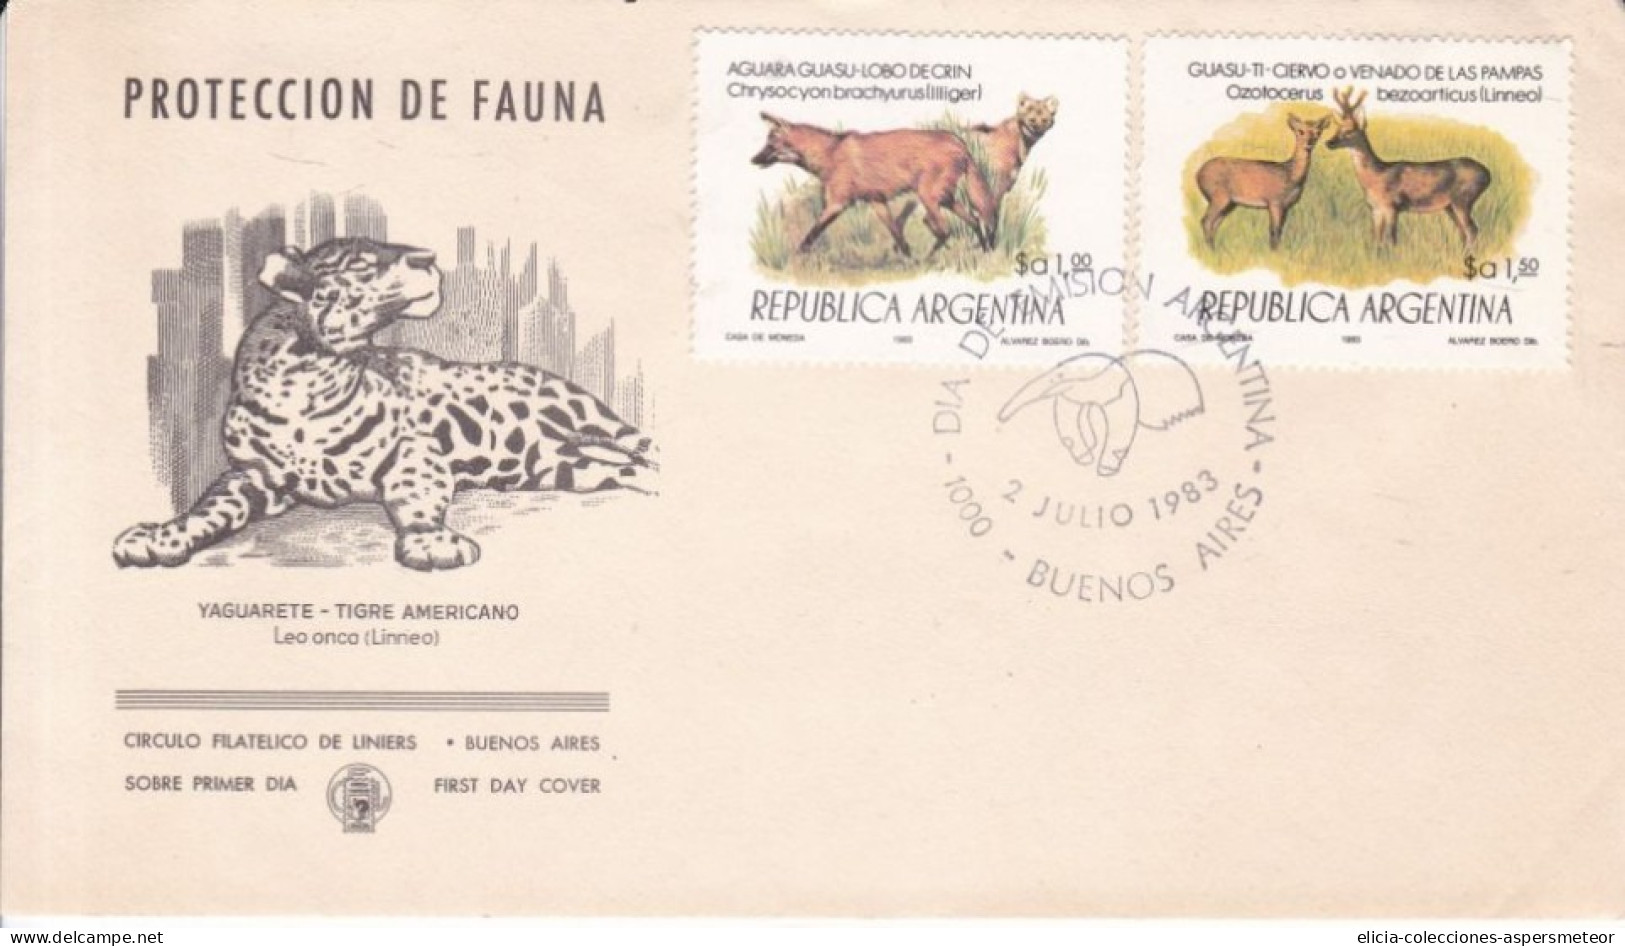 Argentina - 1983 - Envelope - First Day Issue Postmark - Fauna Protection -  Aguara Guasu And Guasu Ti Stamps - Caja 30 - Gebraucht